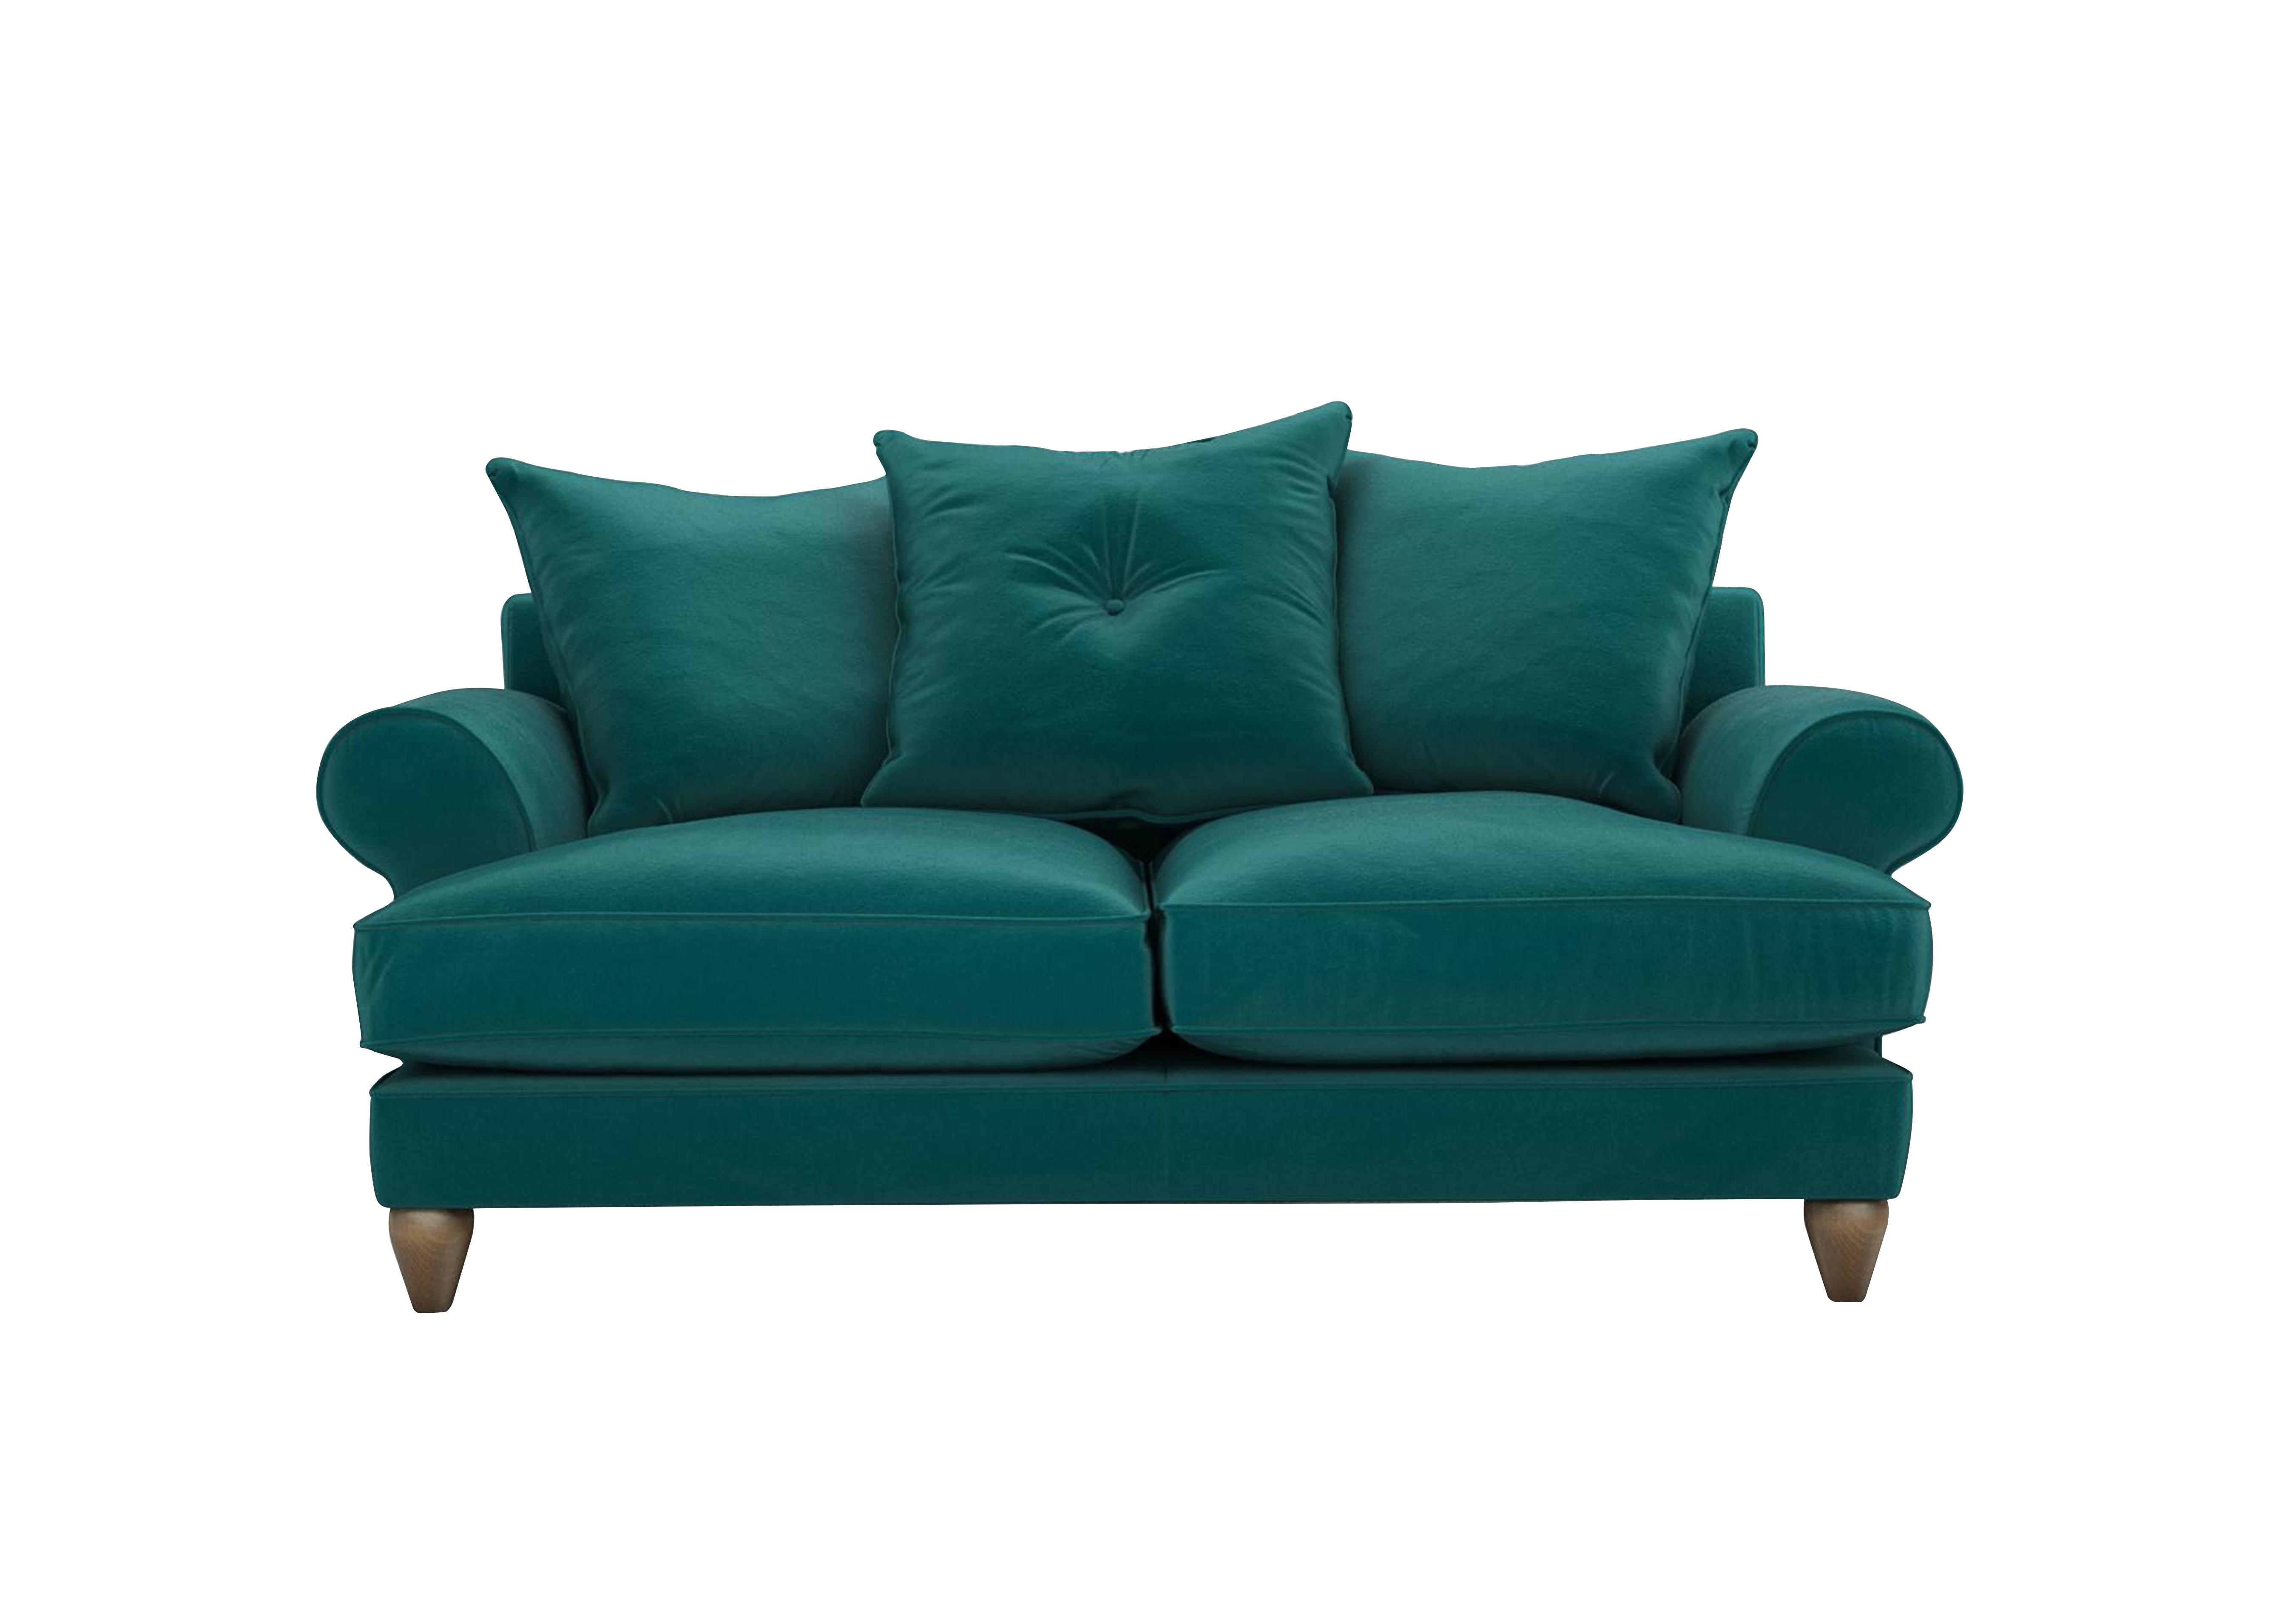 Bronwyn 2.5 Seater Fabric Scatter Back Sofa in Dra008 Dragoneye on Furniture Village